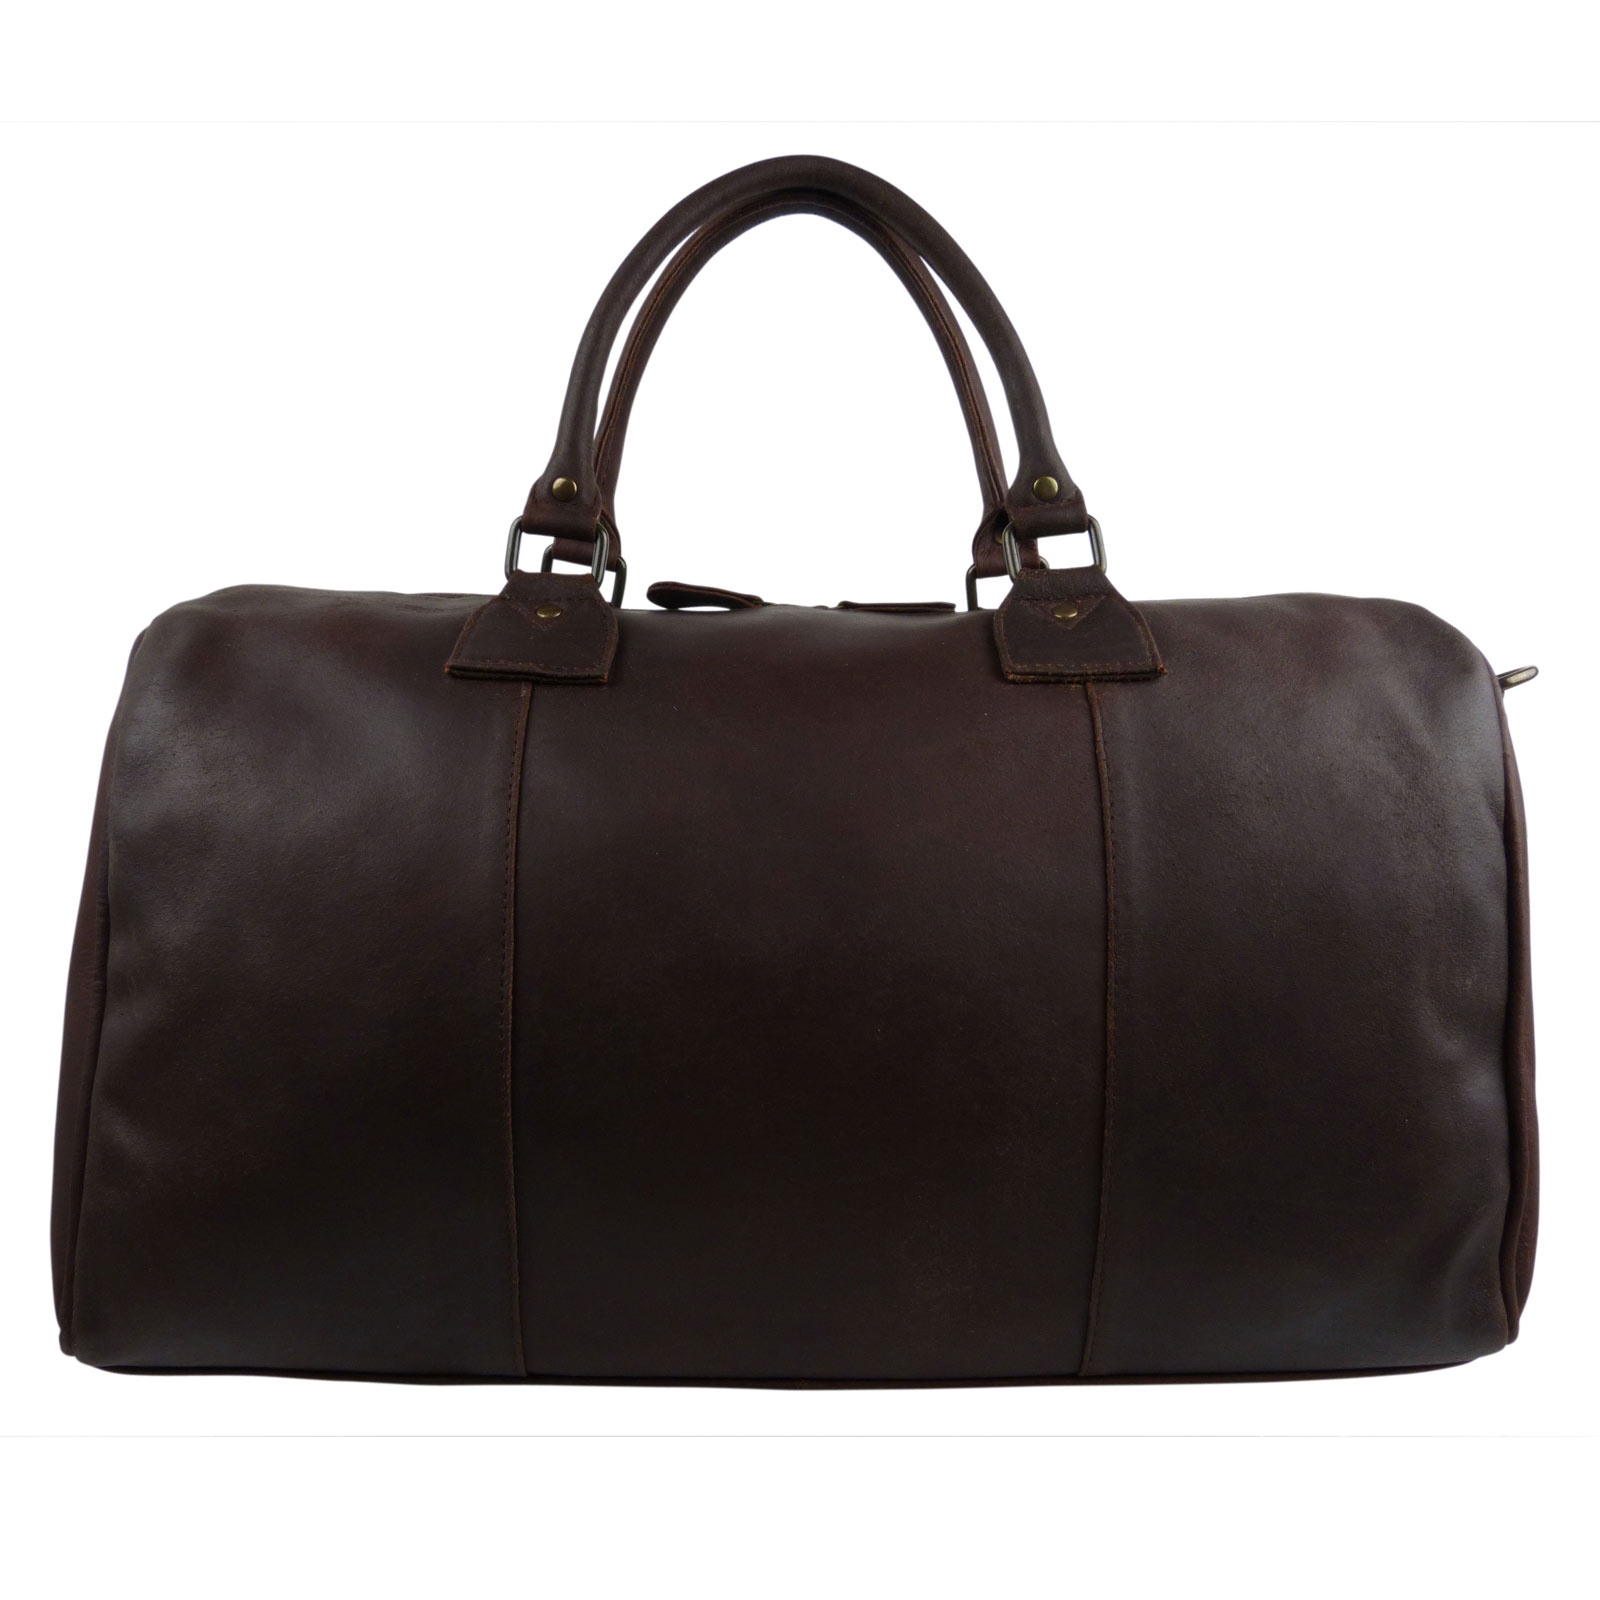 Mens Leather Weekender Holdall by Rowallan Travel Overnight Bag | eBay